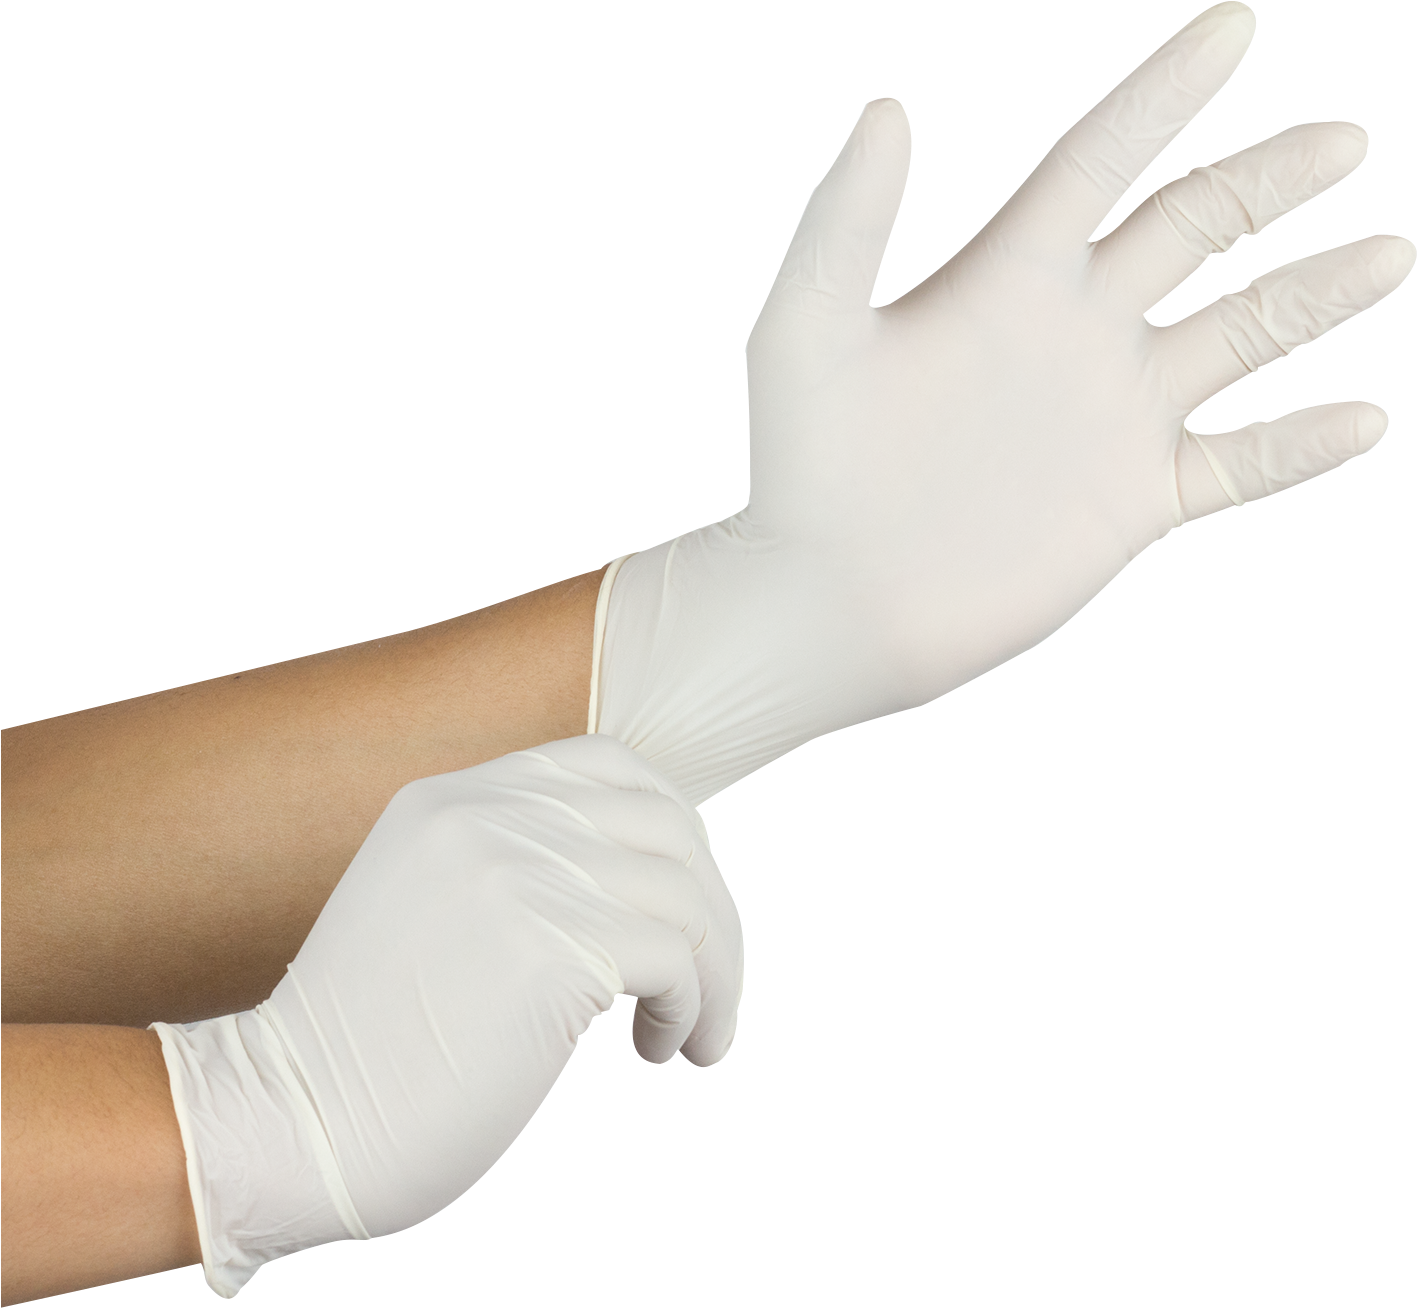 Medical Examination Glove PNG image